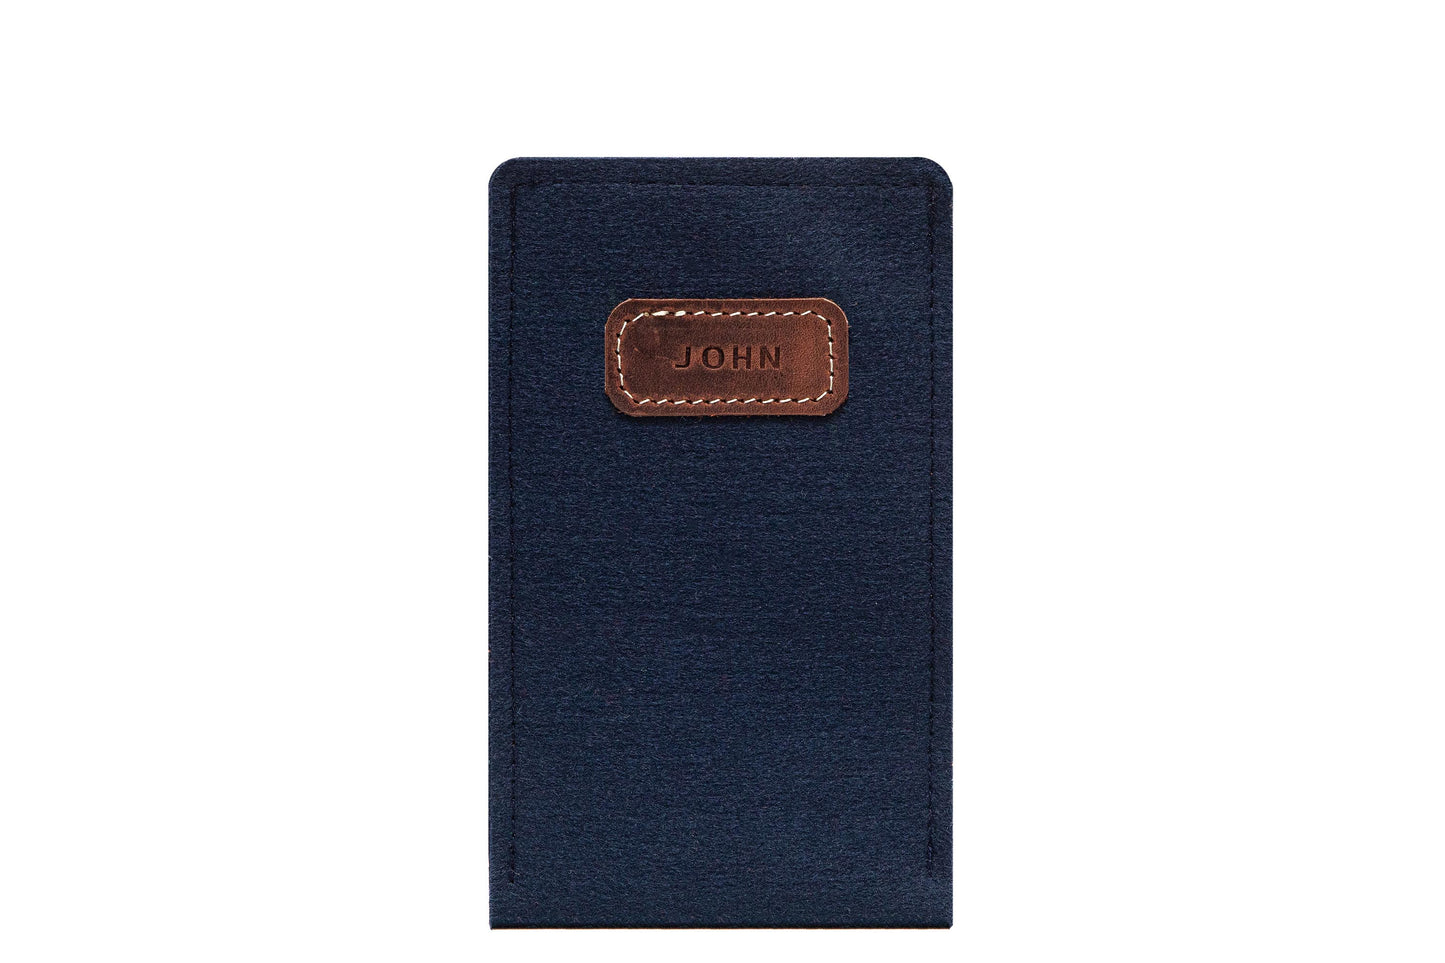 Personalized Felt & Leather iPhone Sleeve: Navy Blue Sophistication